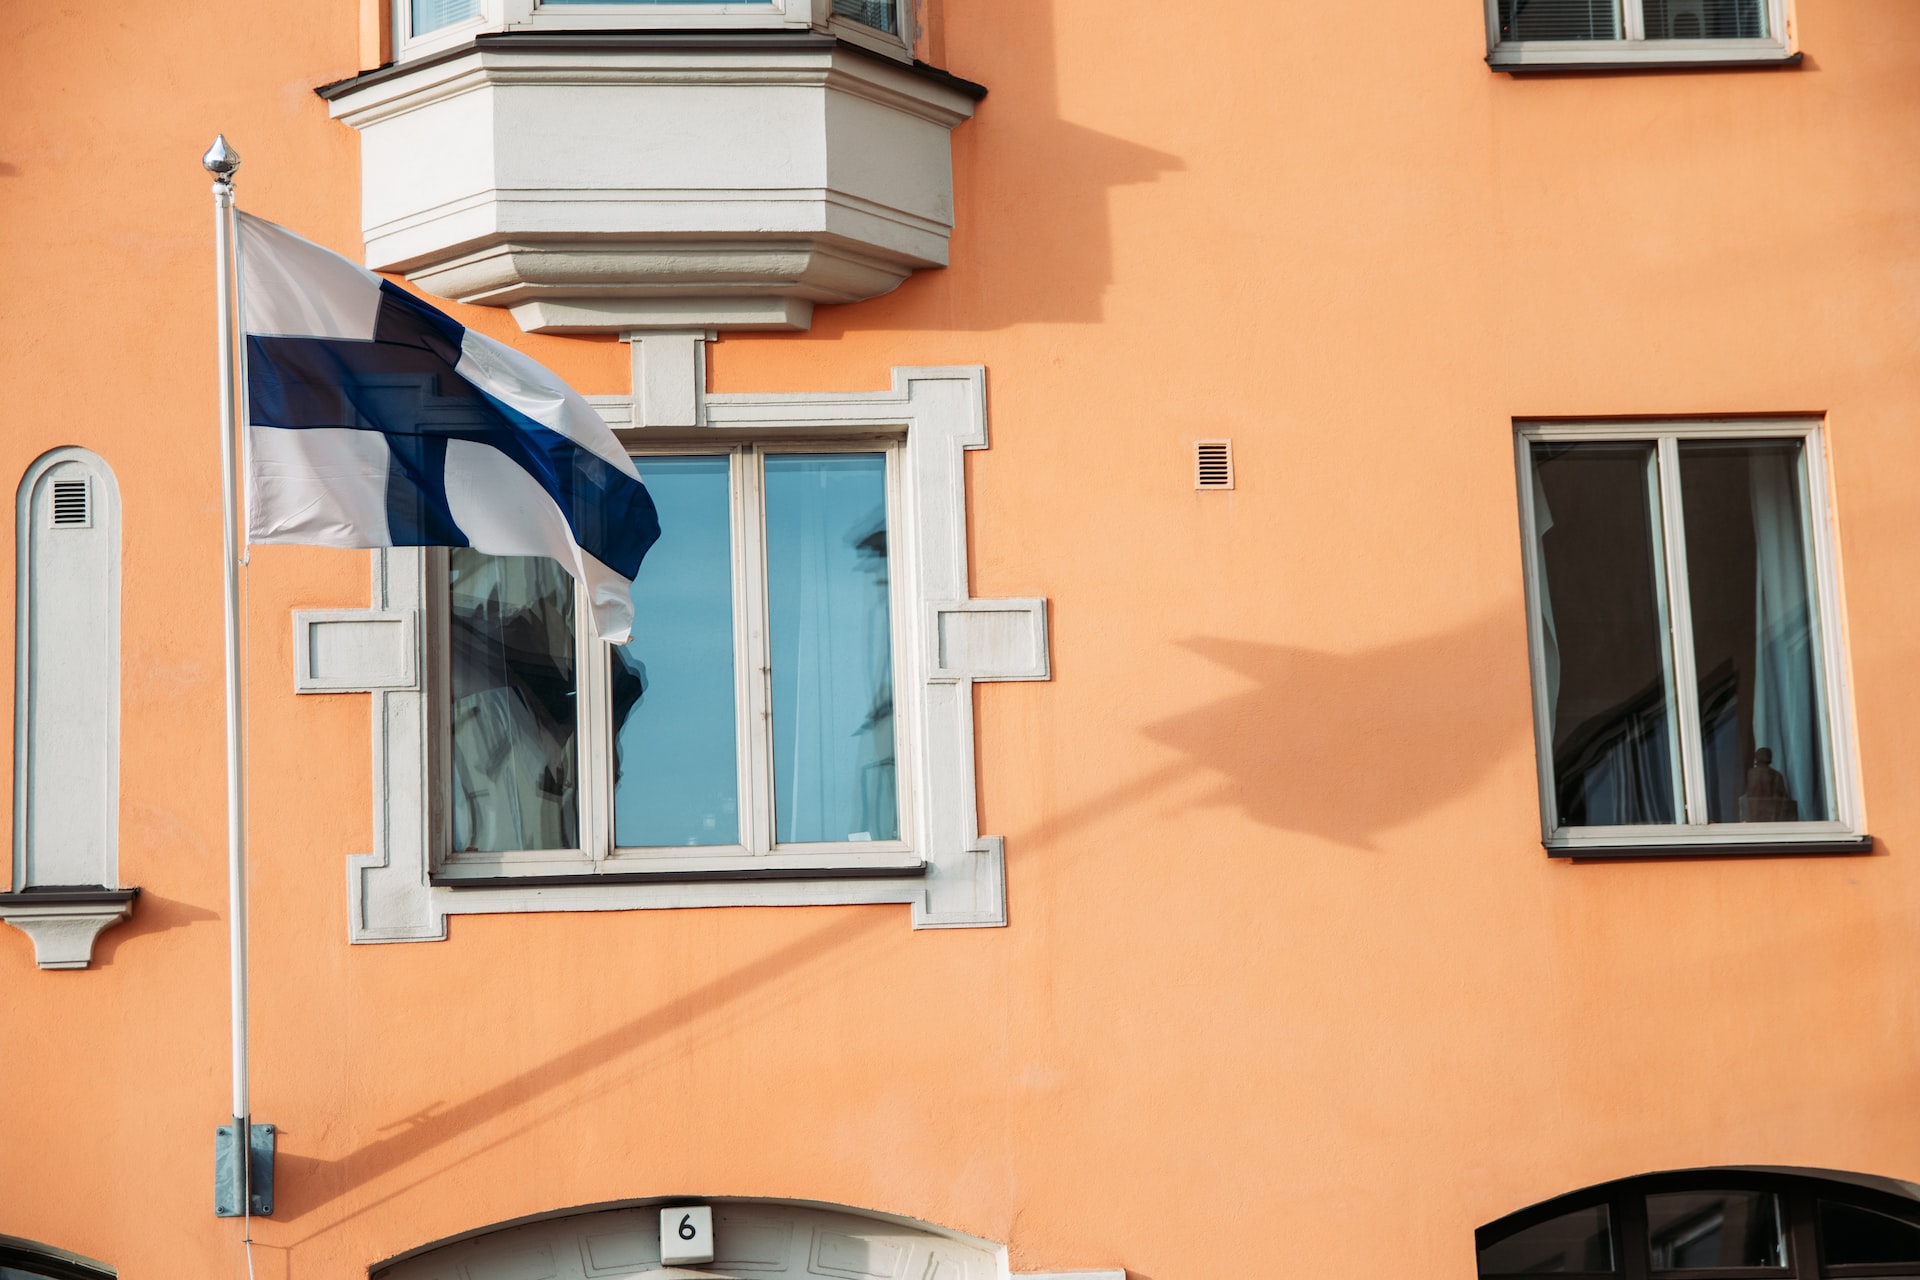 Финляндия арестовала имущество россиян почти на 200 миллионов евро